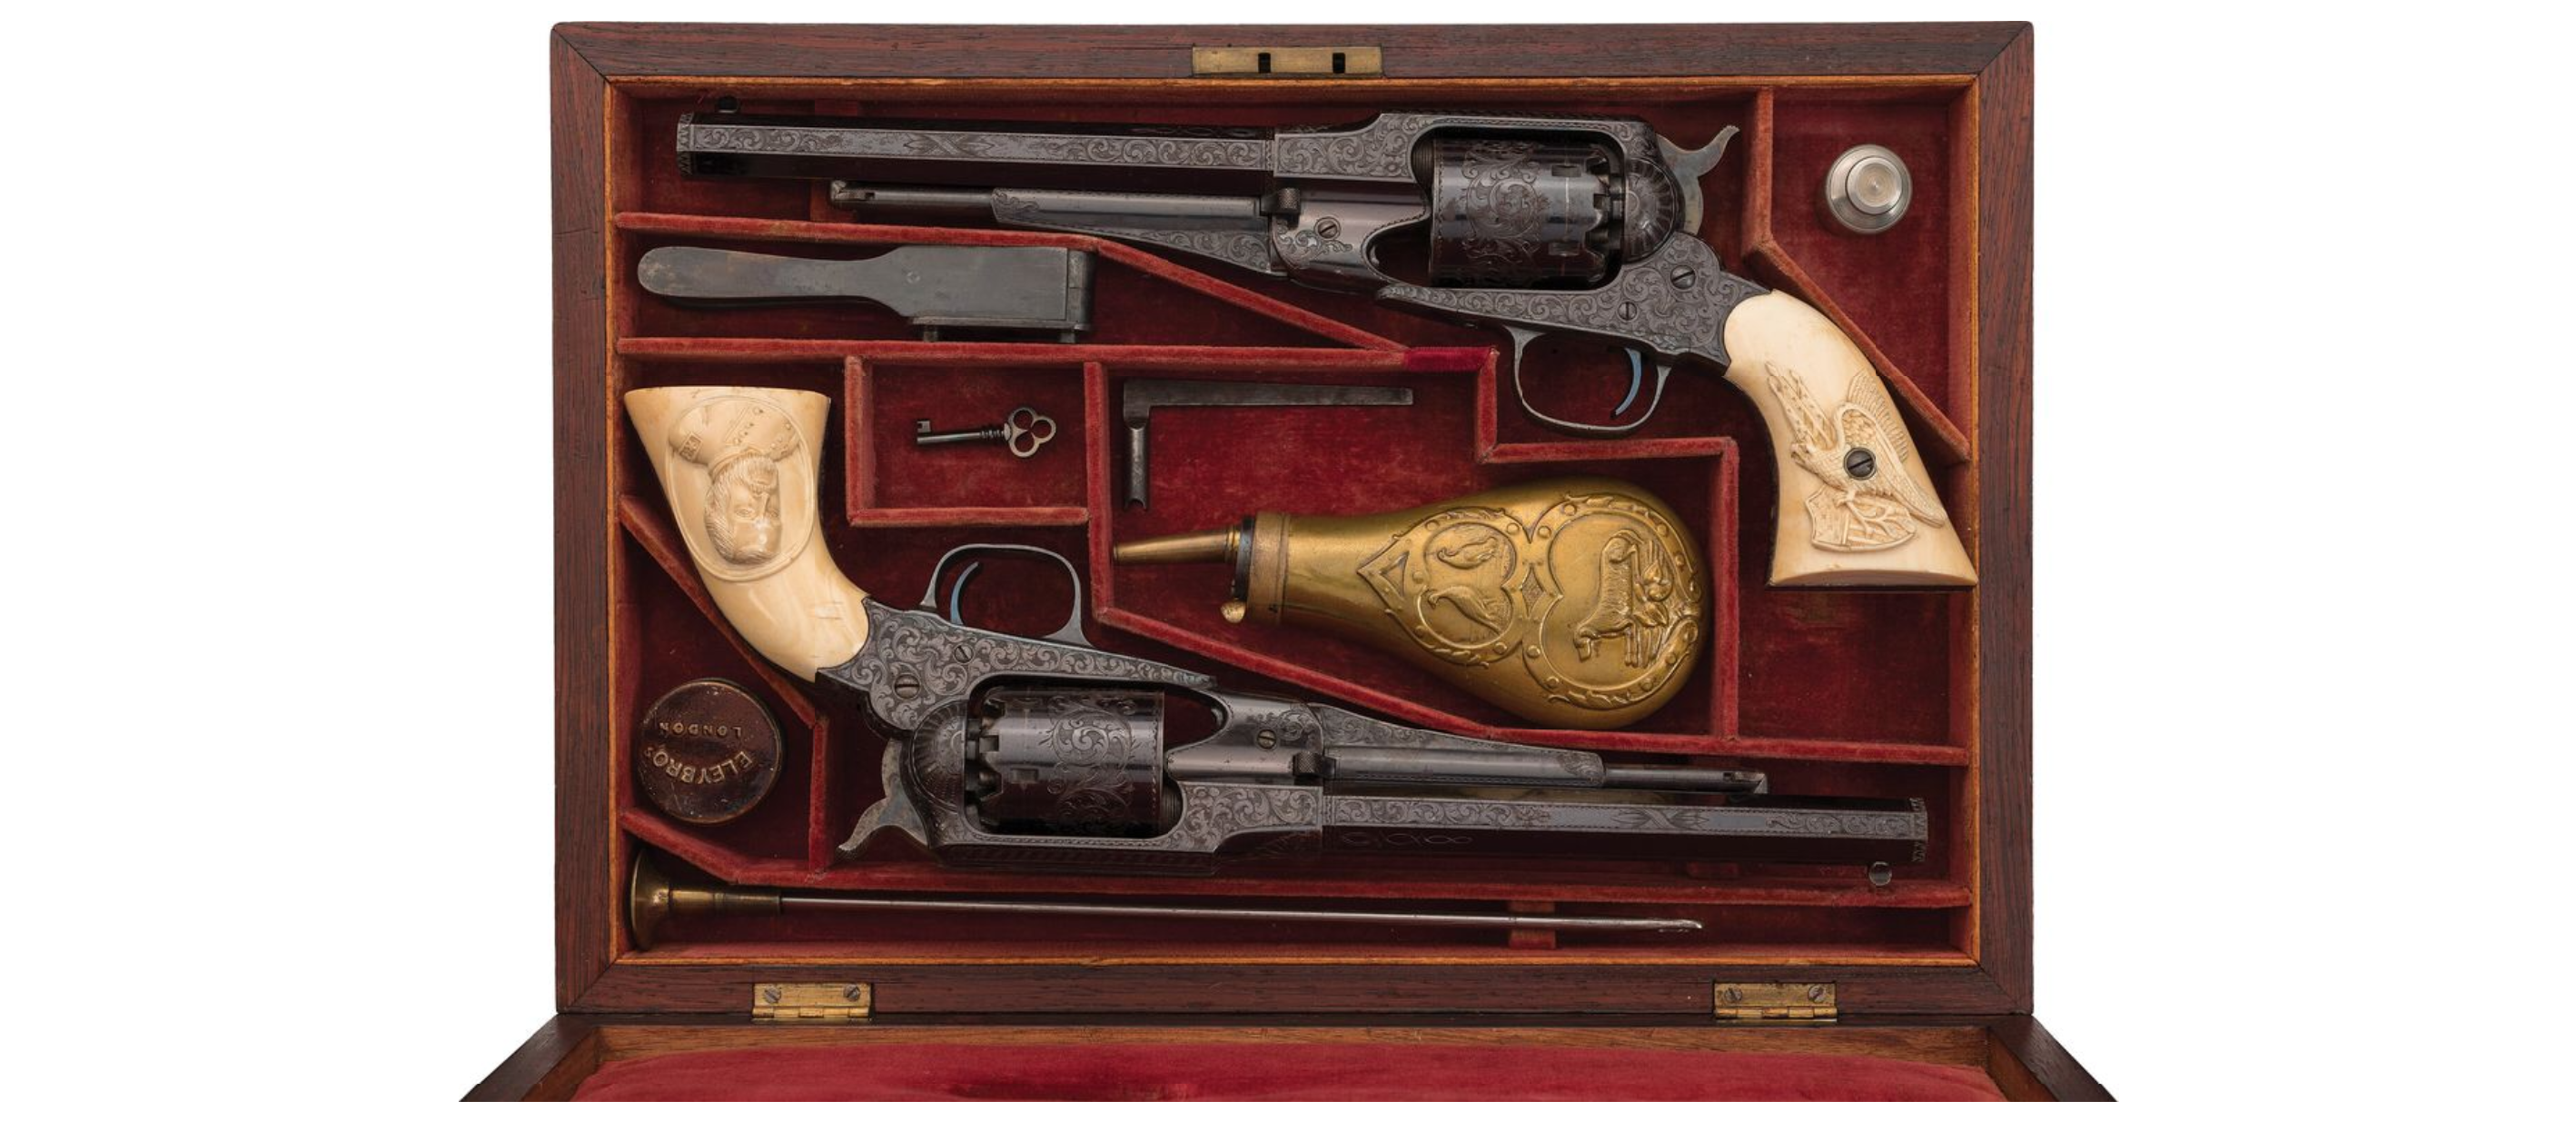 Grant's Remington revolvers.